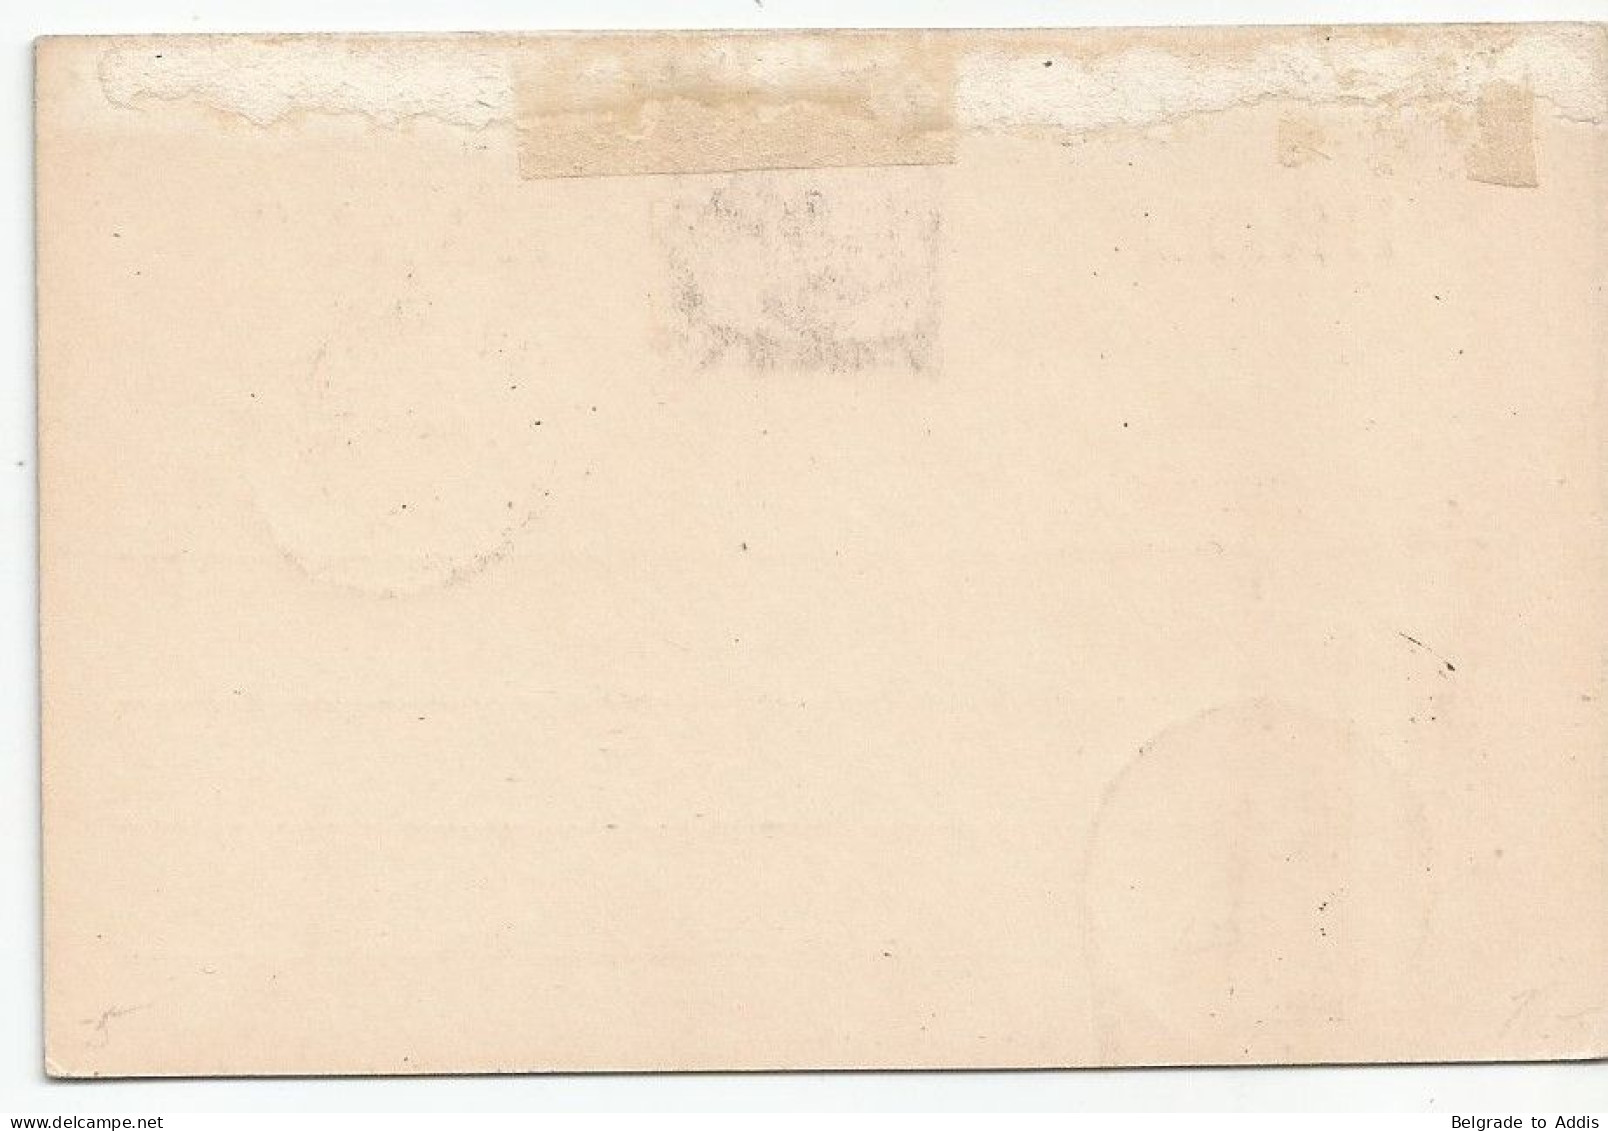 South Africa Great Britain ORC OFS Orange River Colony / Free State PostCard Postal Stationery 1892 Sent To Germany - Estado Libre De Orange (1868-1909)